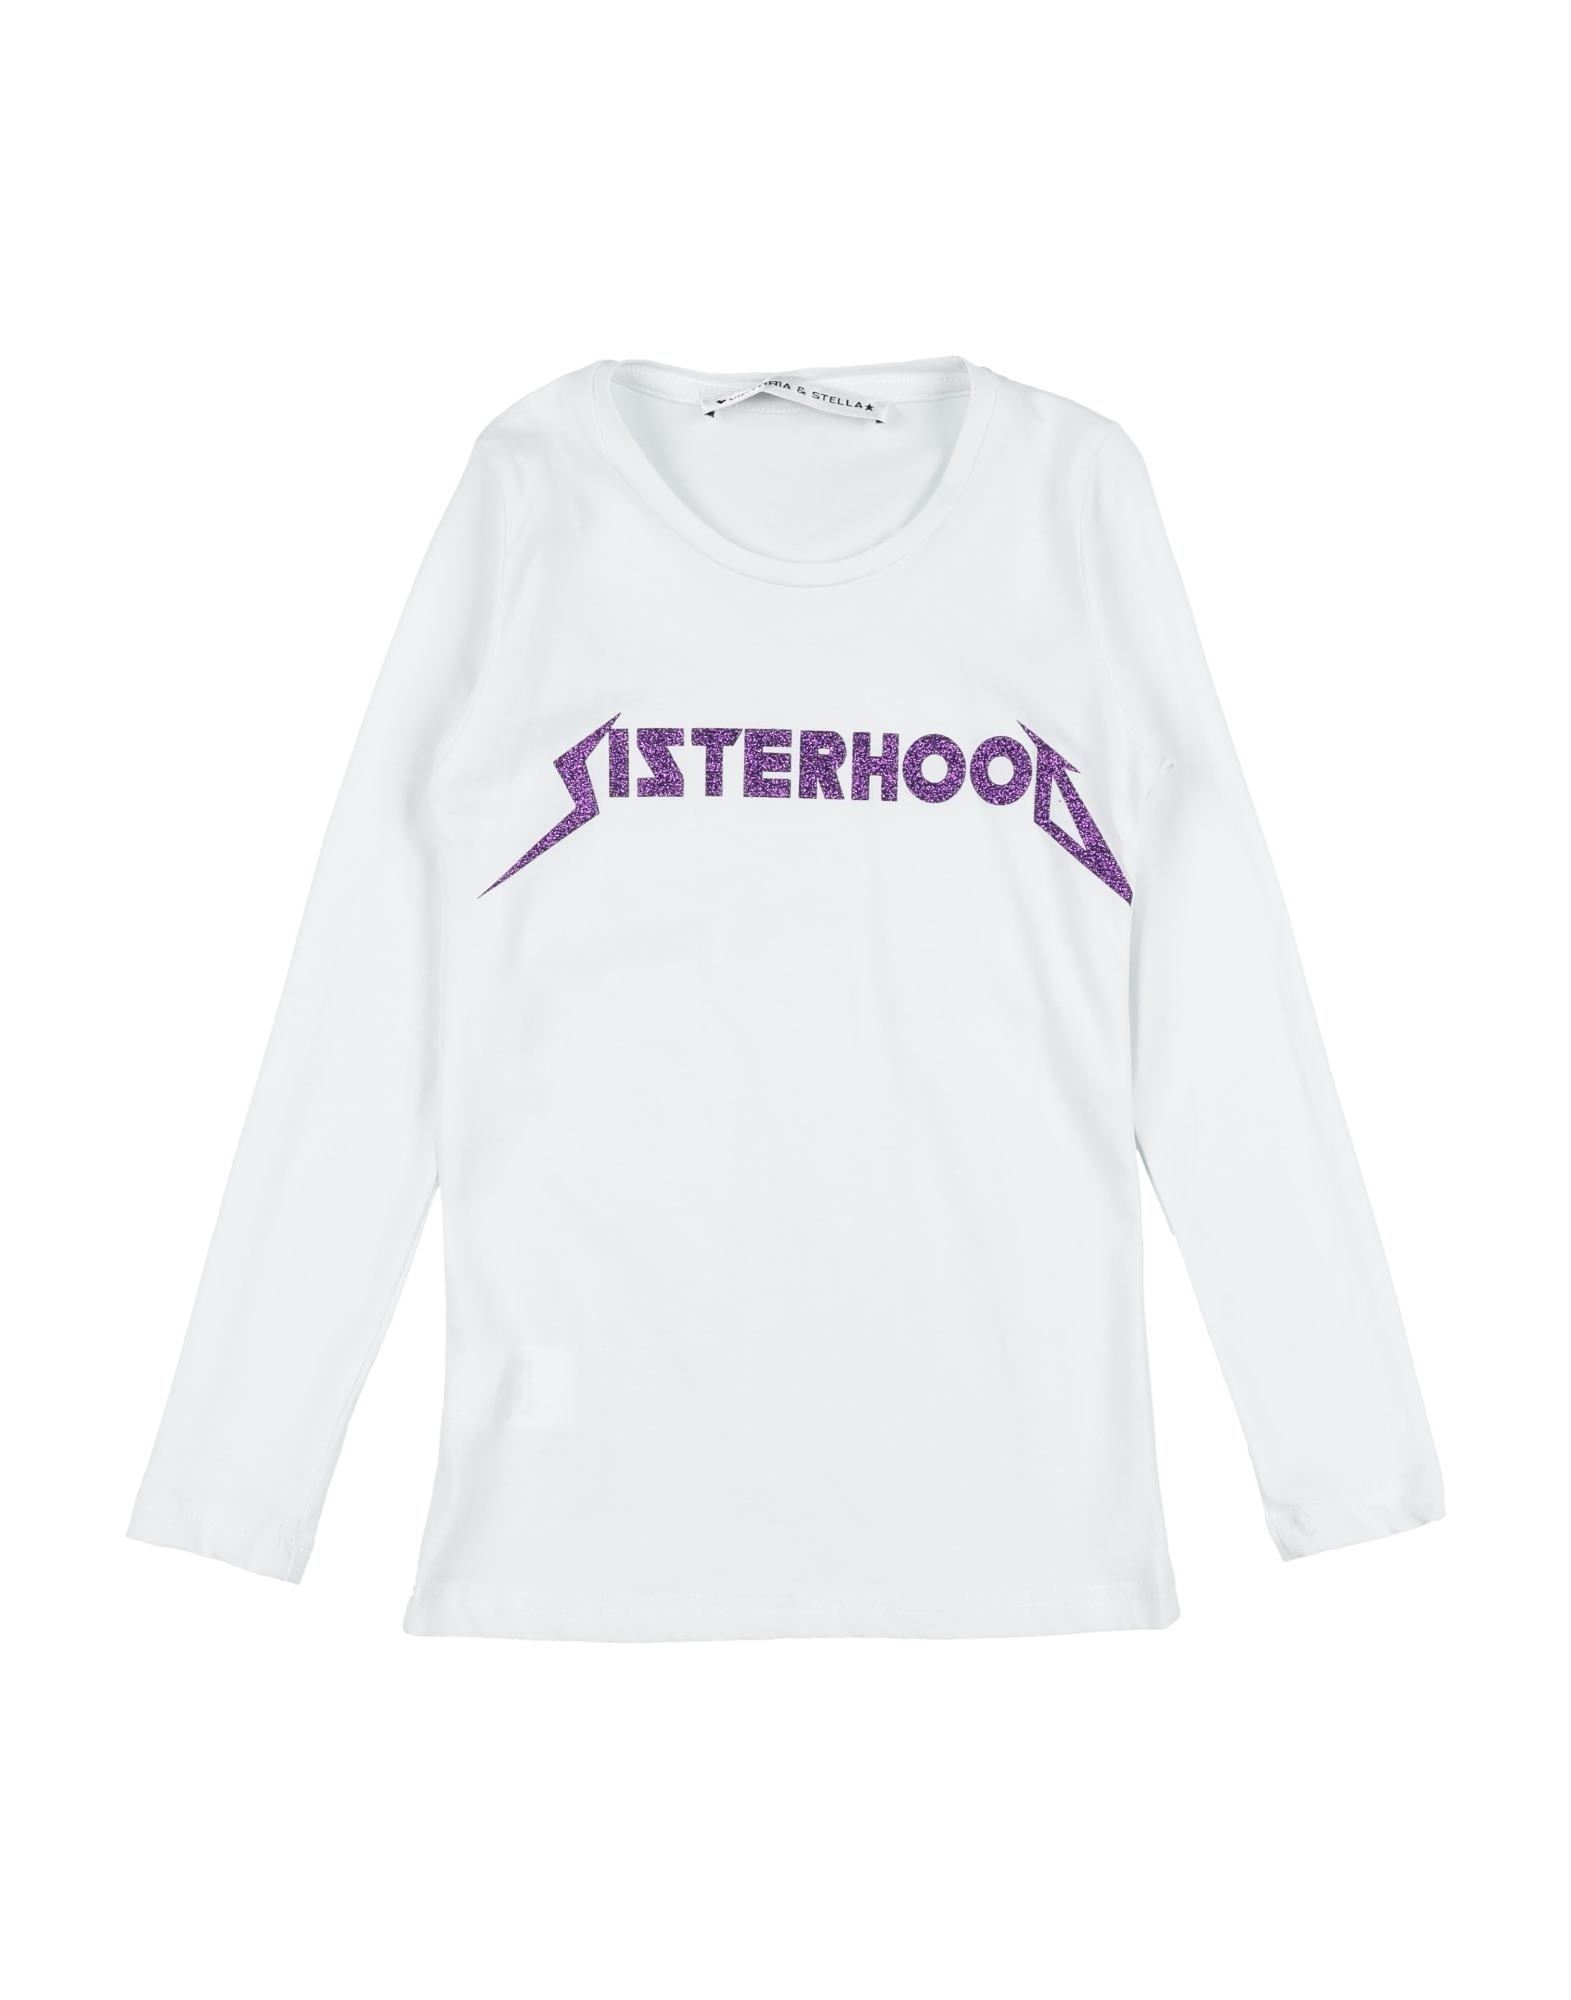 Victoria & Stella Kids'  Toddler Girl T-shirt White Size 6 Cotton